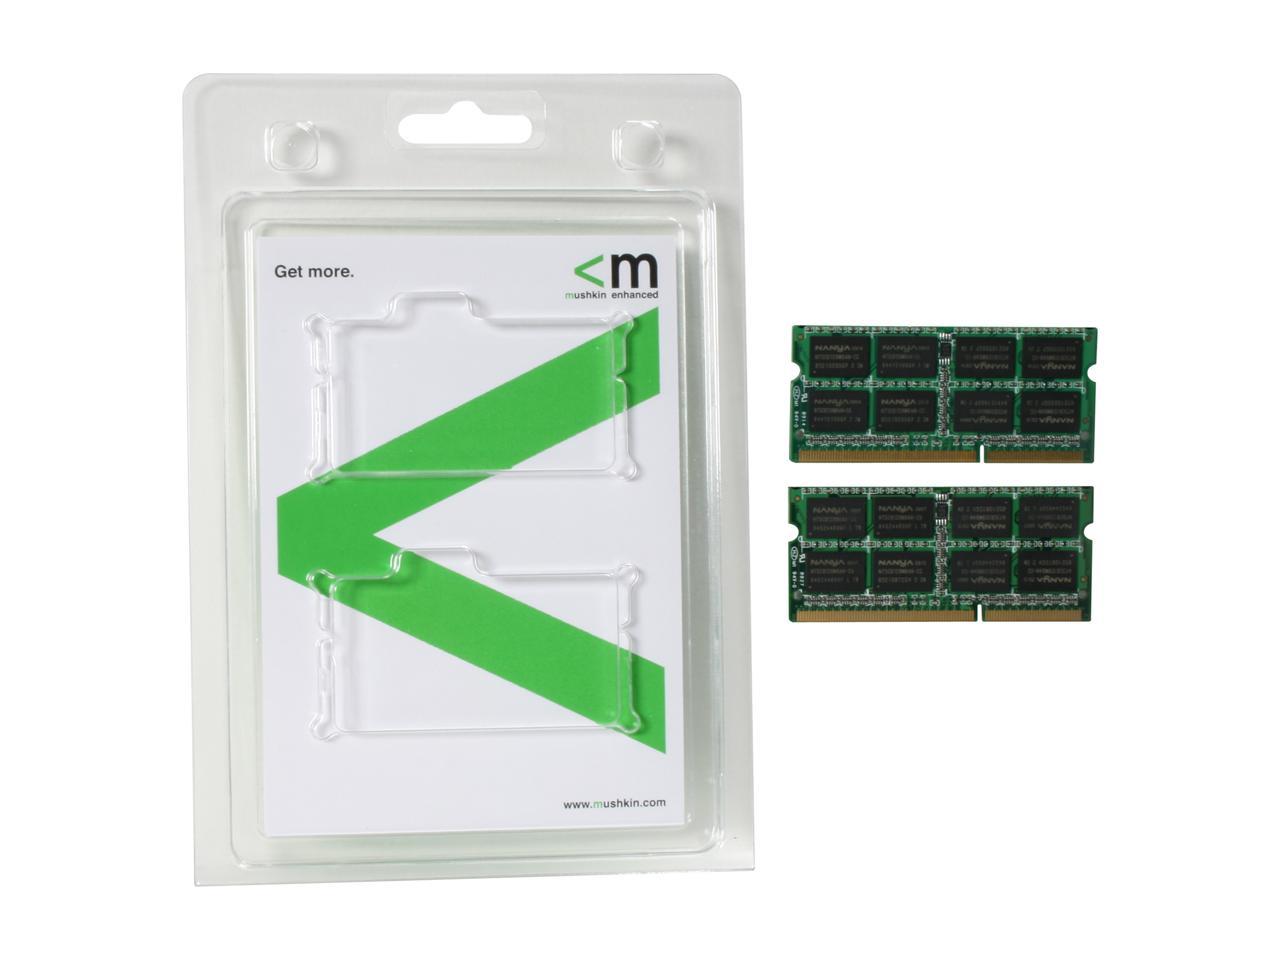 Mushkin 4GB (2 x 2GB) DDR3 1066 (PC3 8500) Dual Channel Kit Memory For Apple Model 976643A